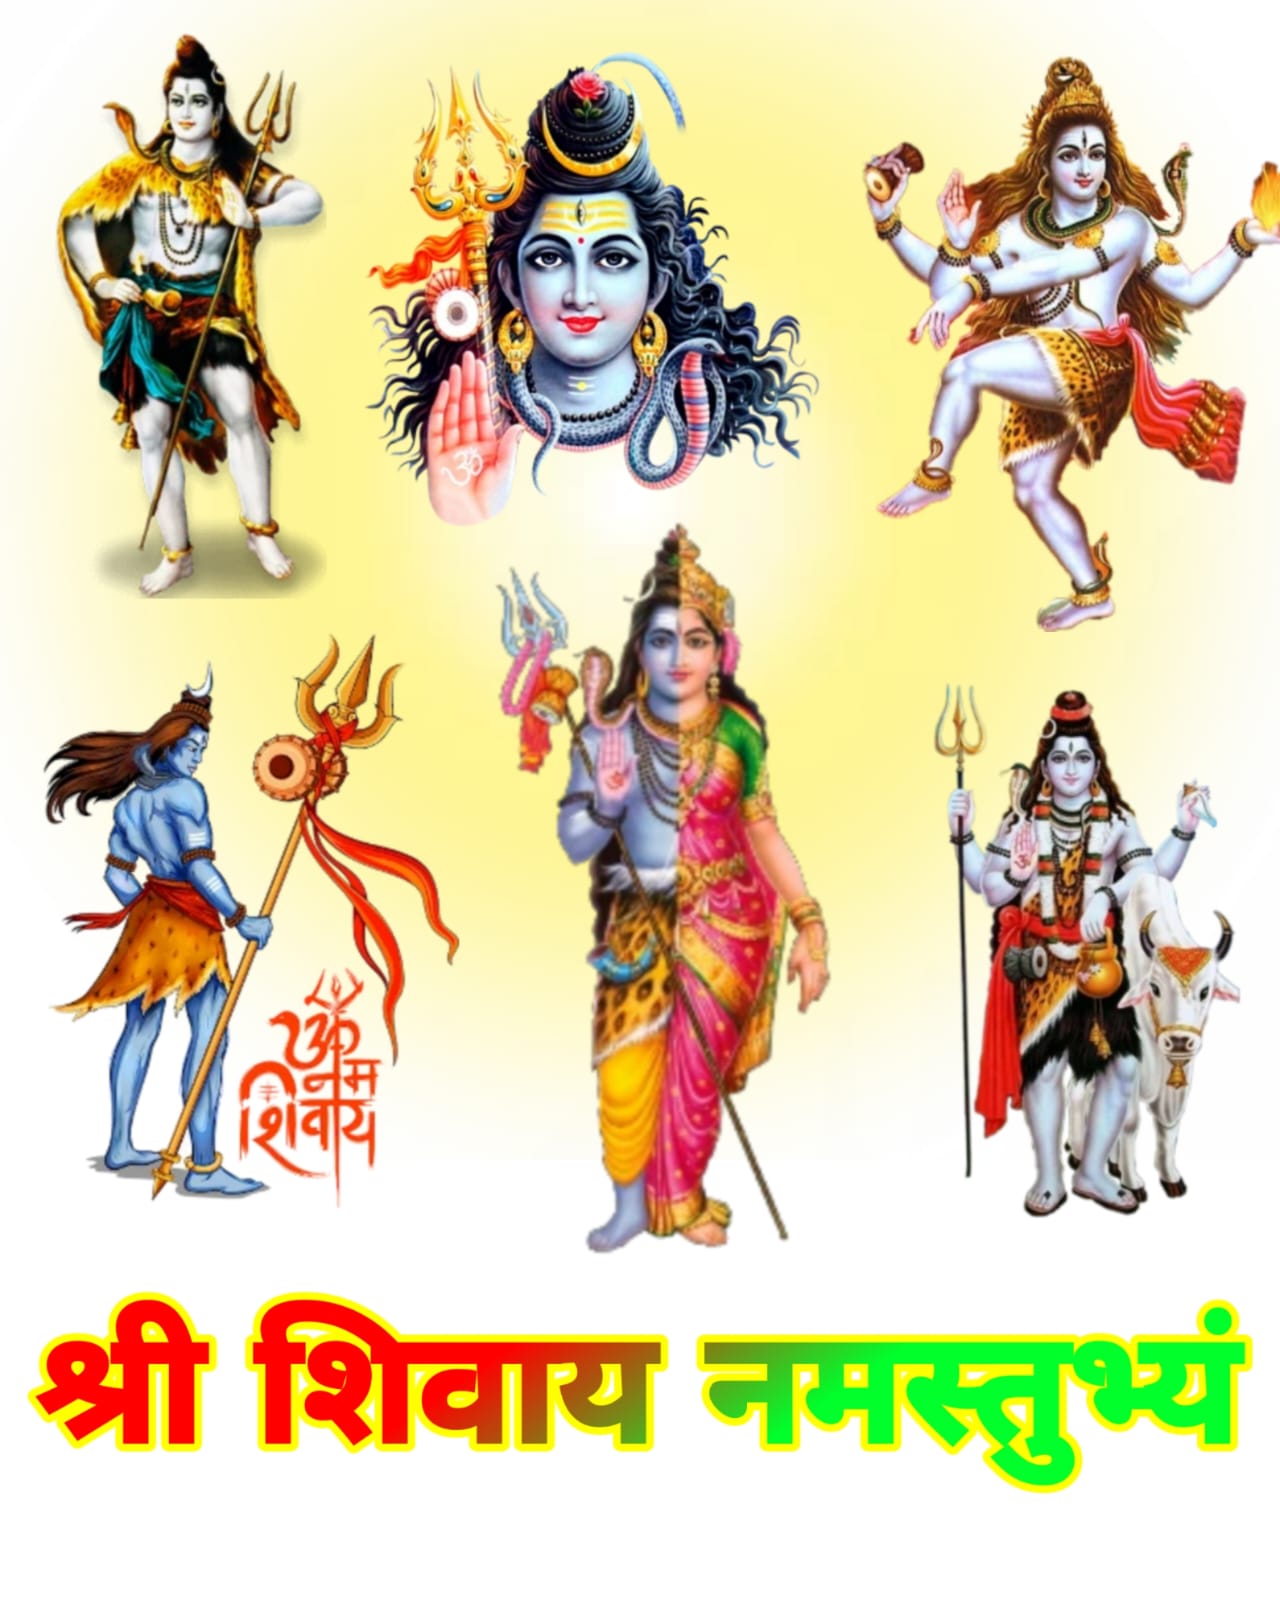 श्री शिवाय नमस्तुभ्यं फोटो वॉलपेपर | Shree Shivay Namastubhyam wallpaper photo image Download